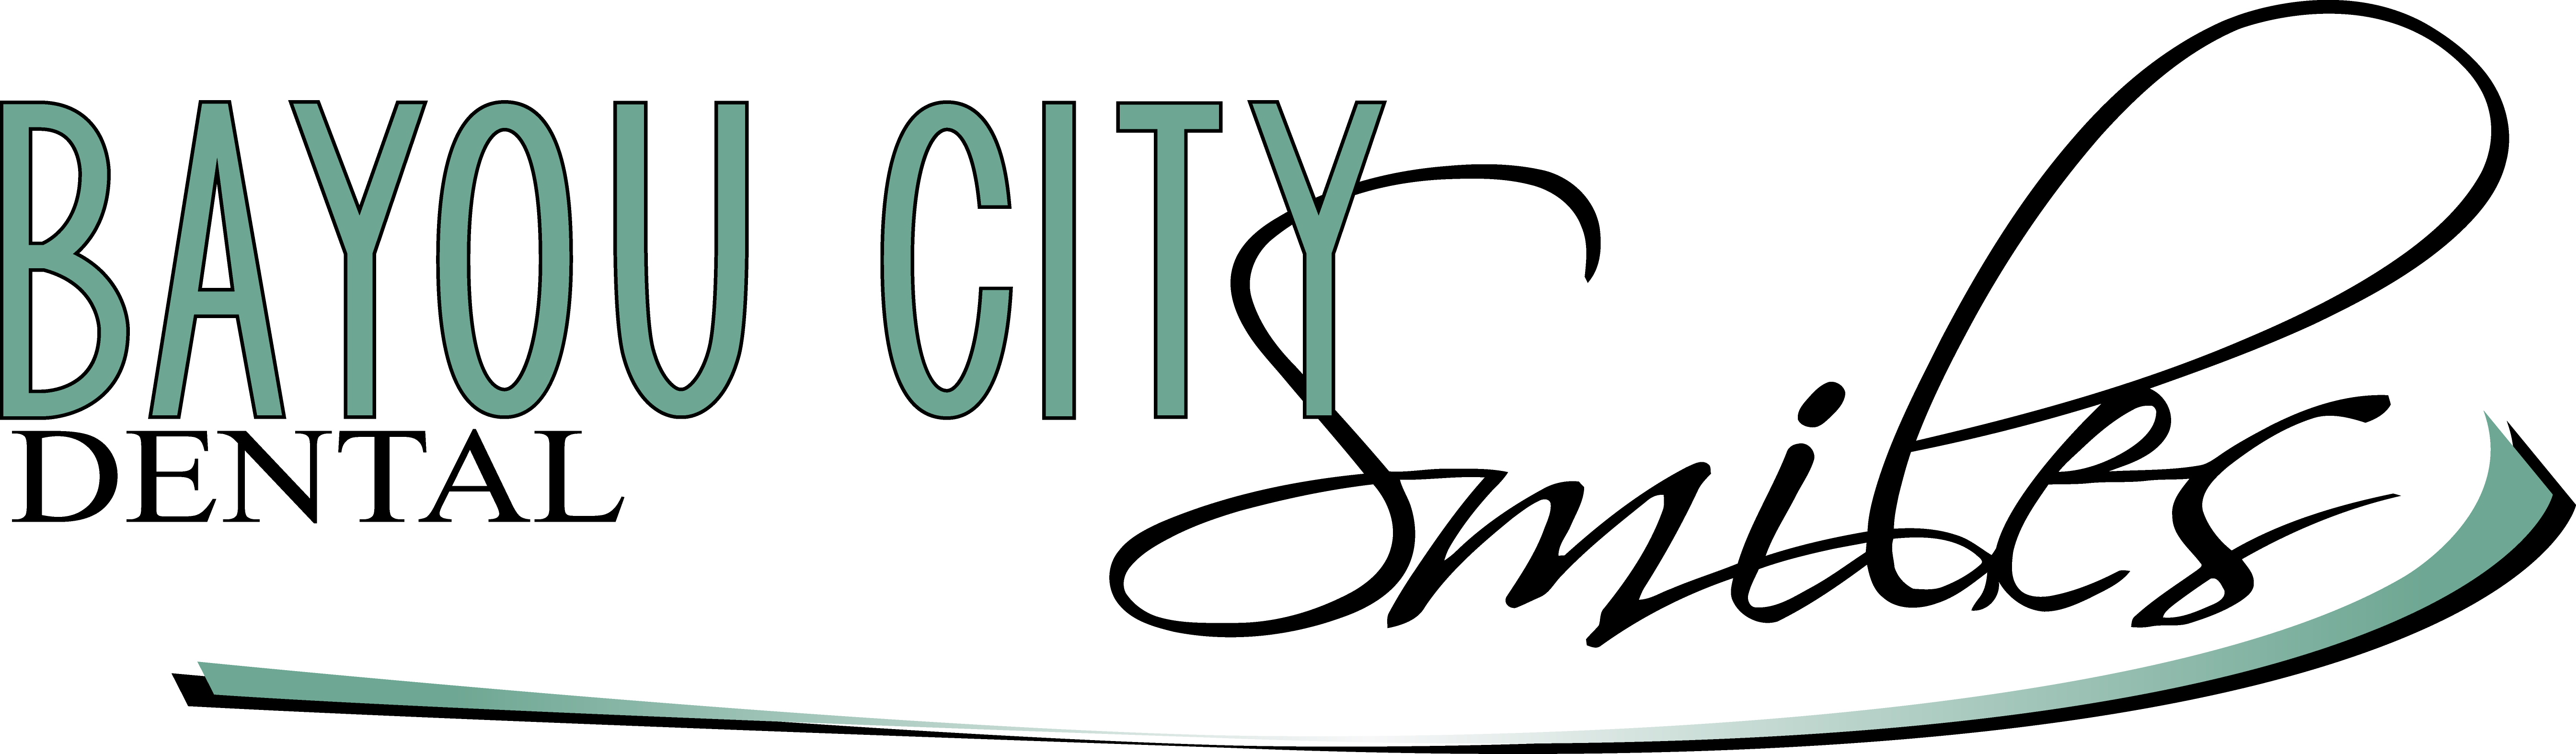 Bayou CityS miles logo full